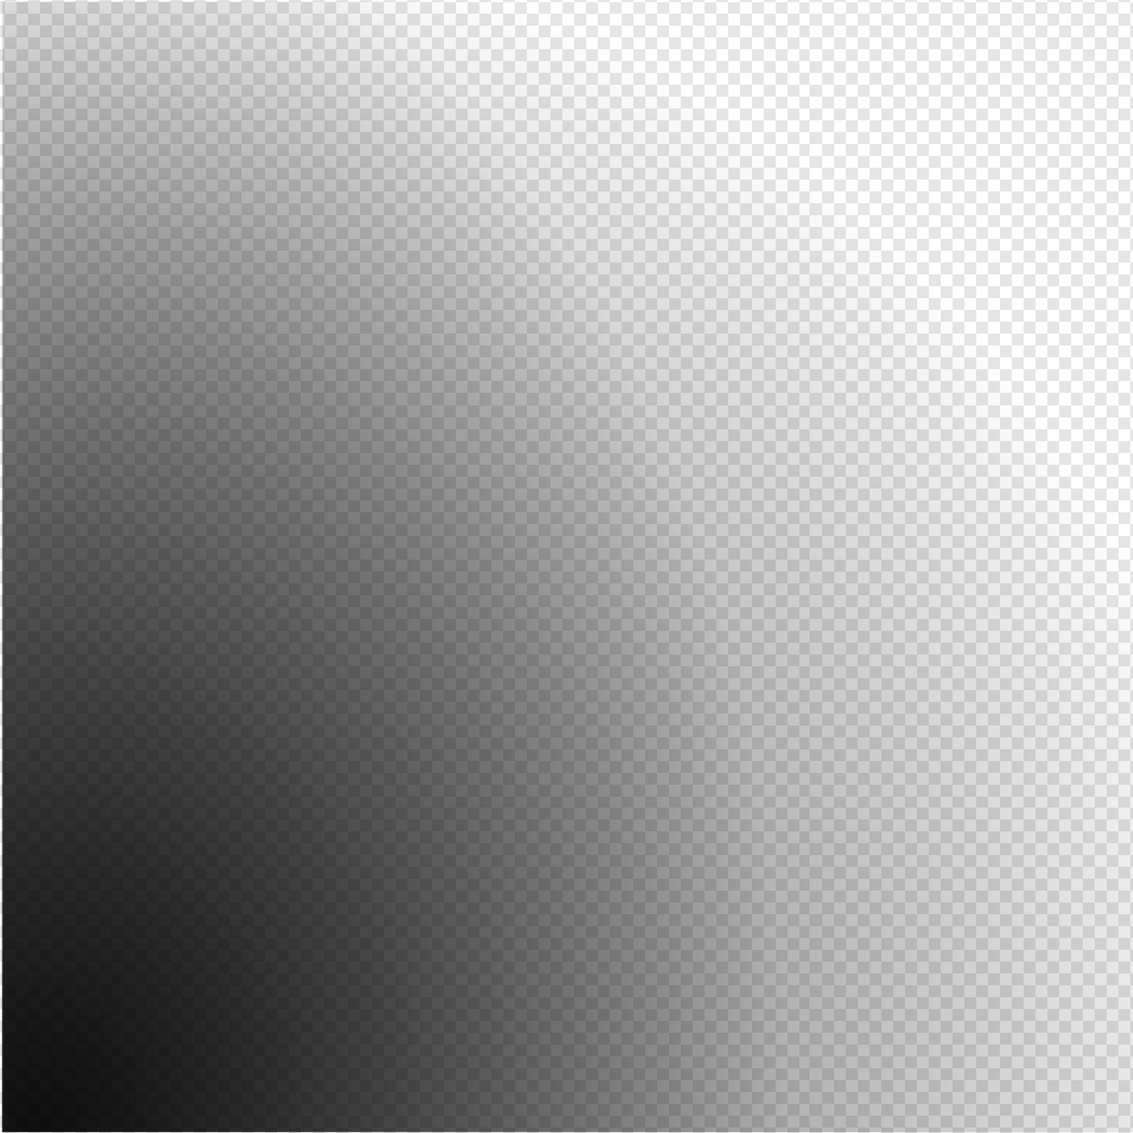 Gray Background PNG Transparent Images Download - PNG Packs